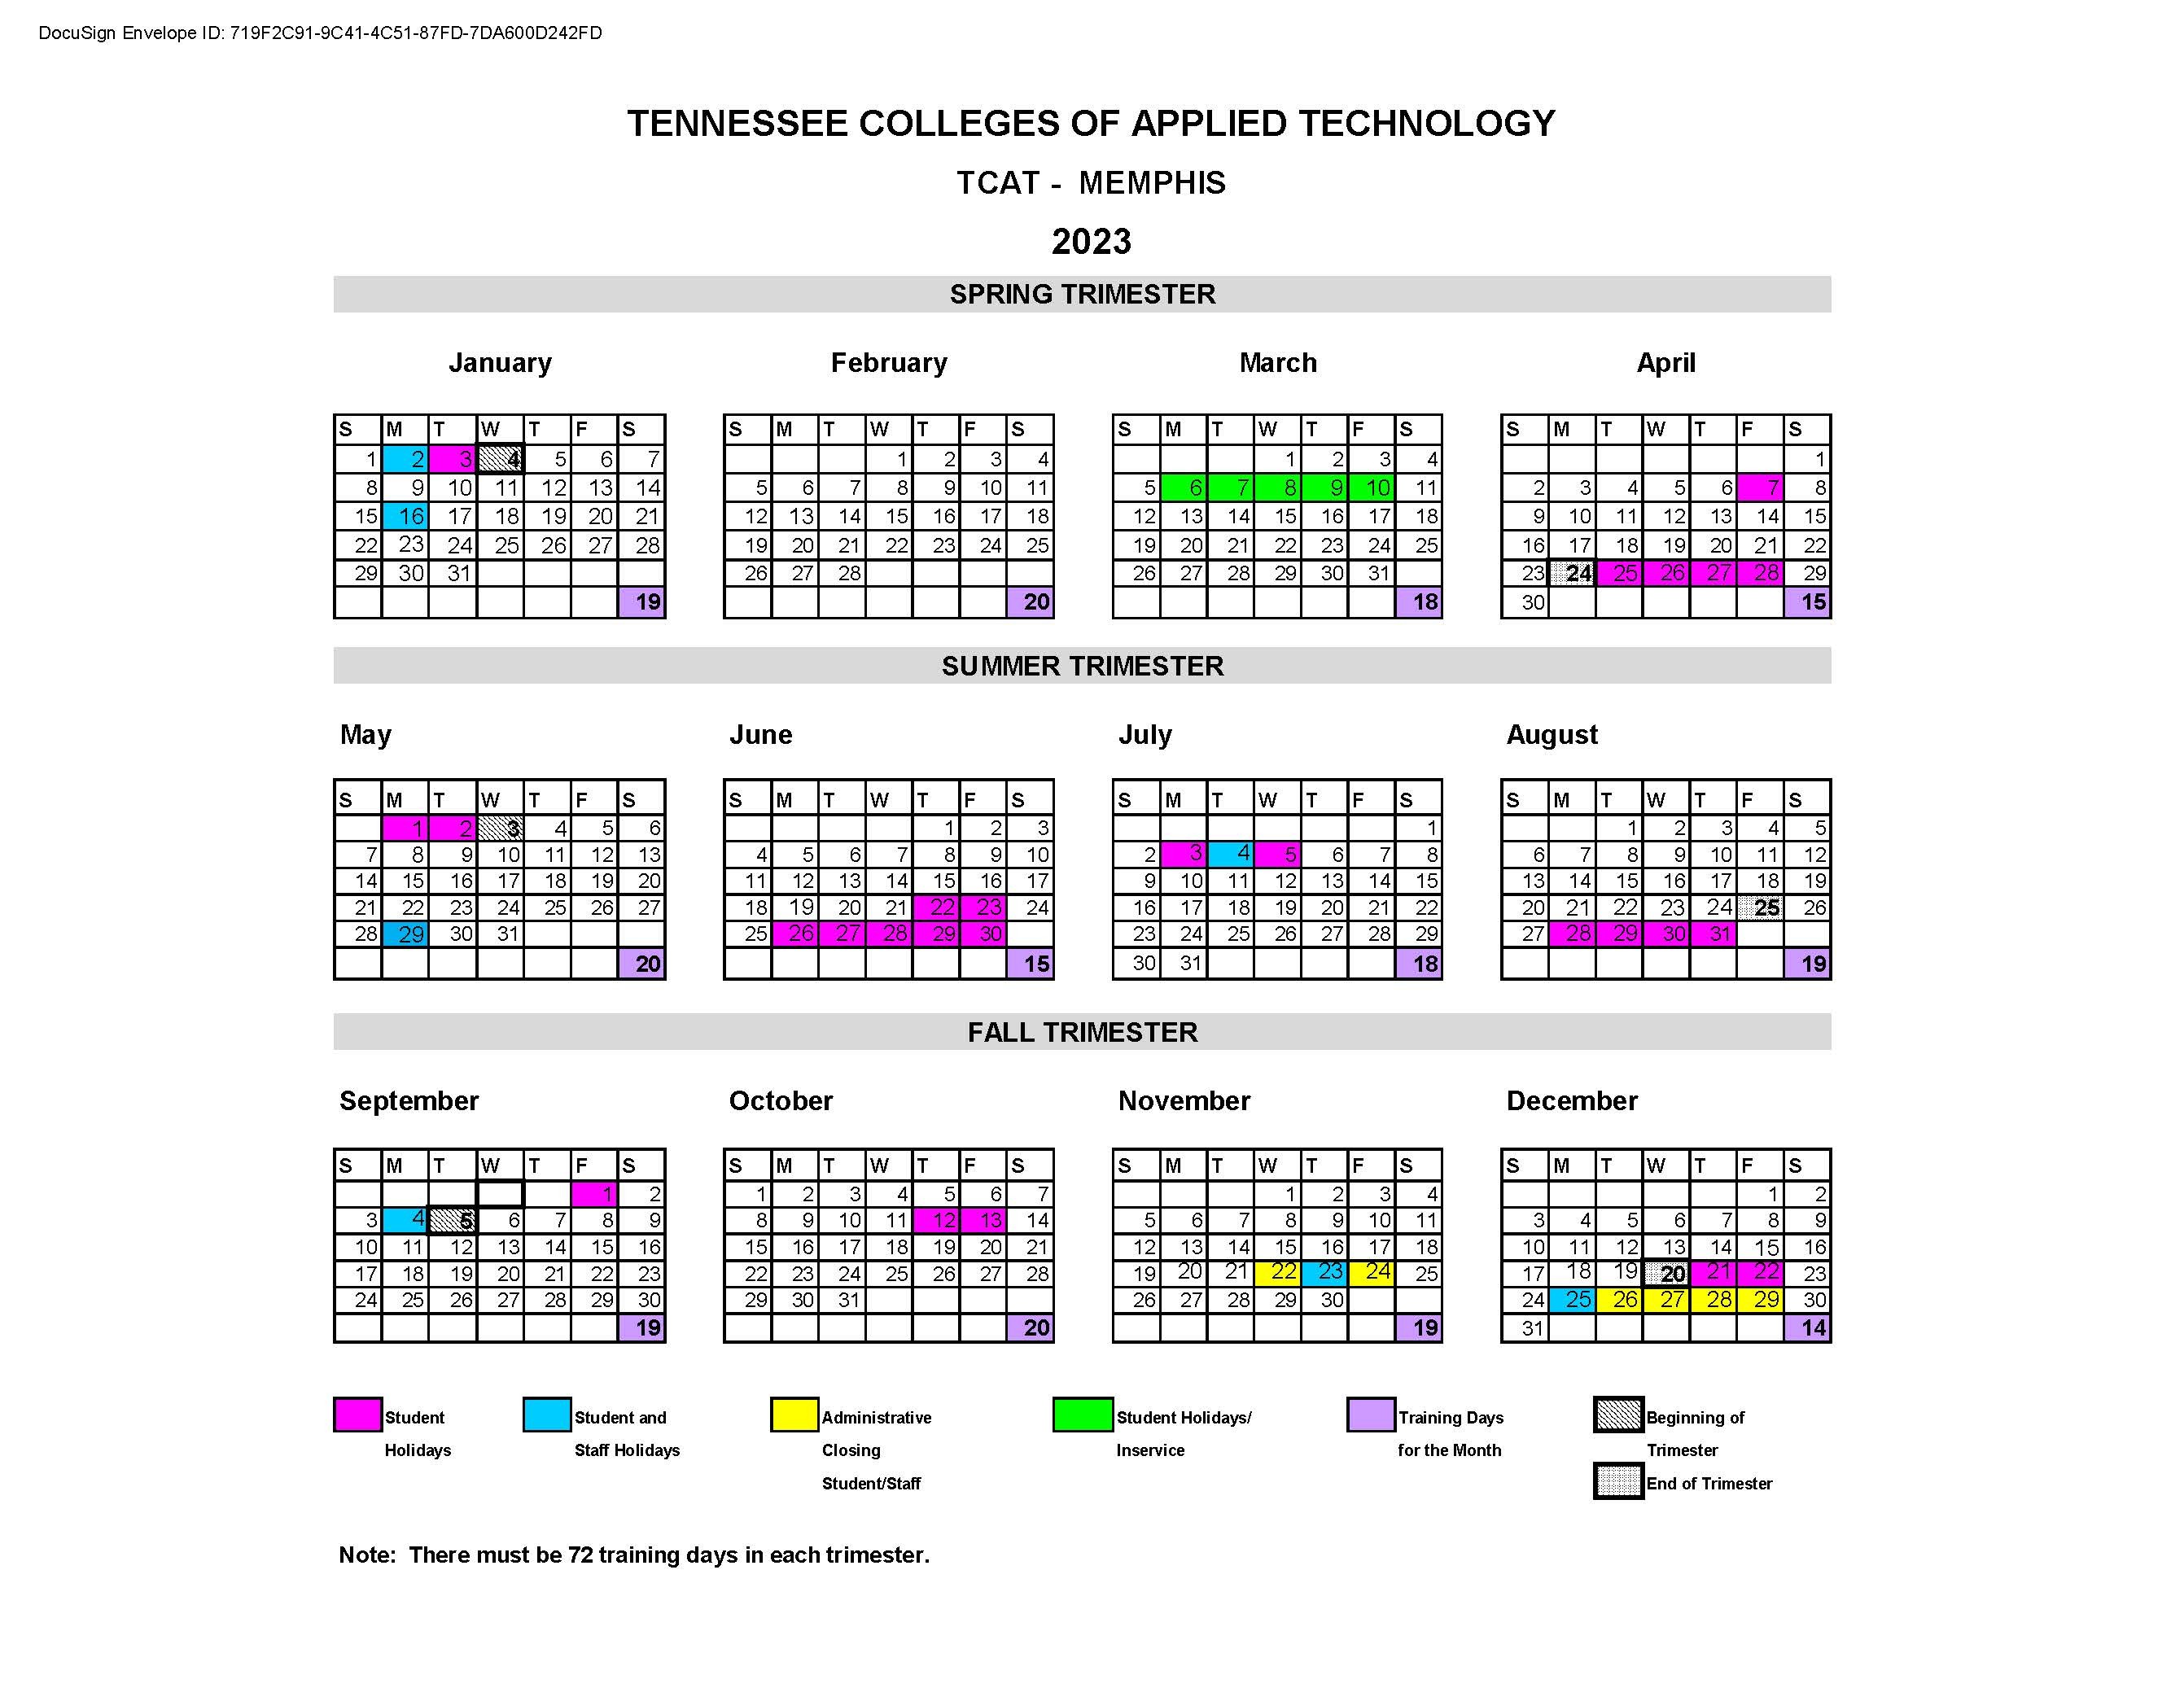 TCAT 2023 Academic Calendar